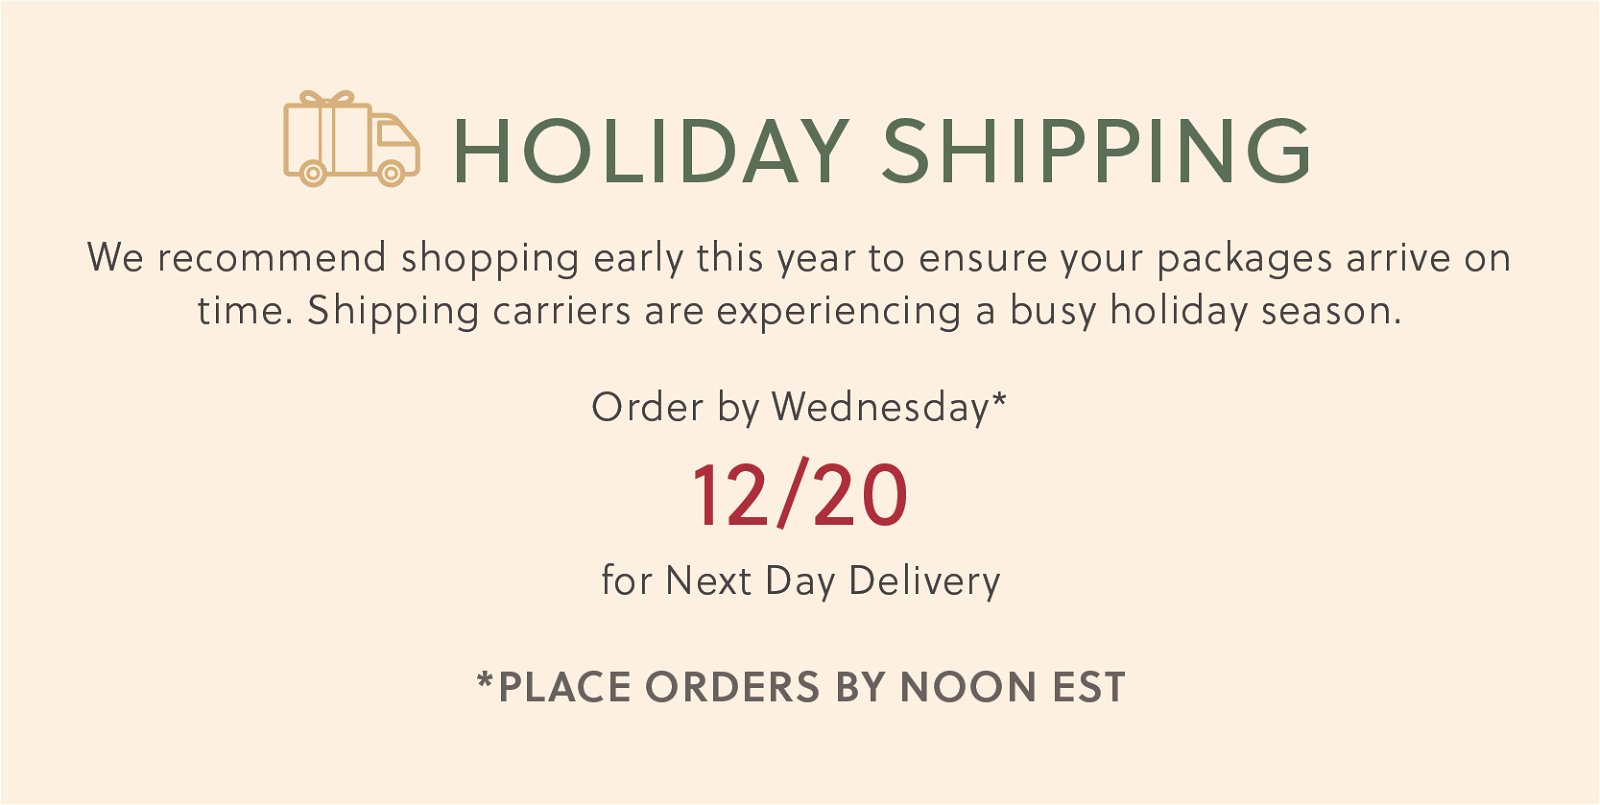 Holiday Shipping Information